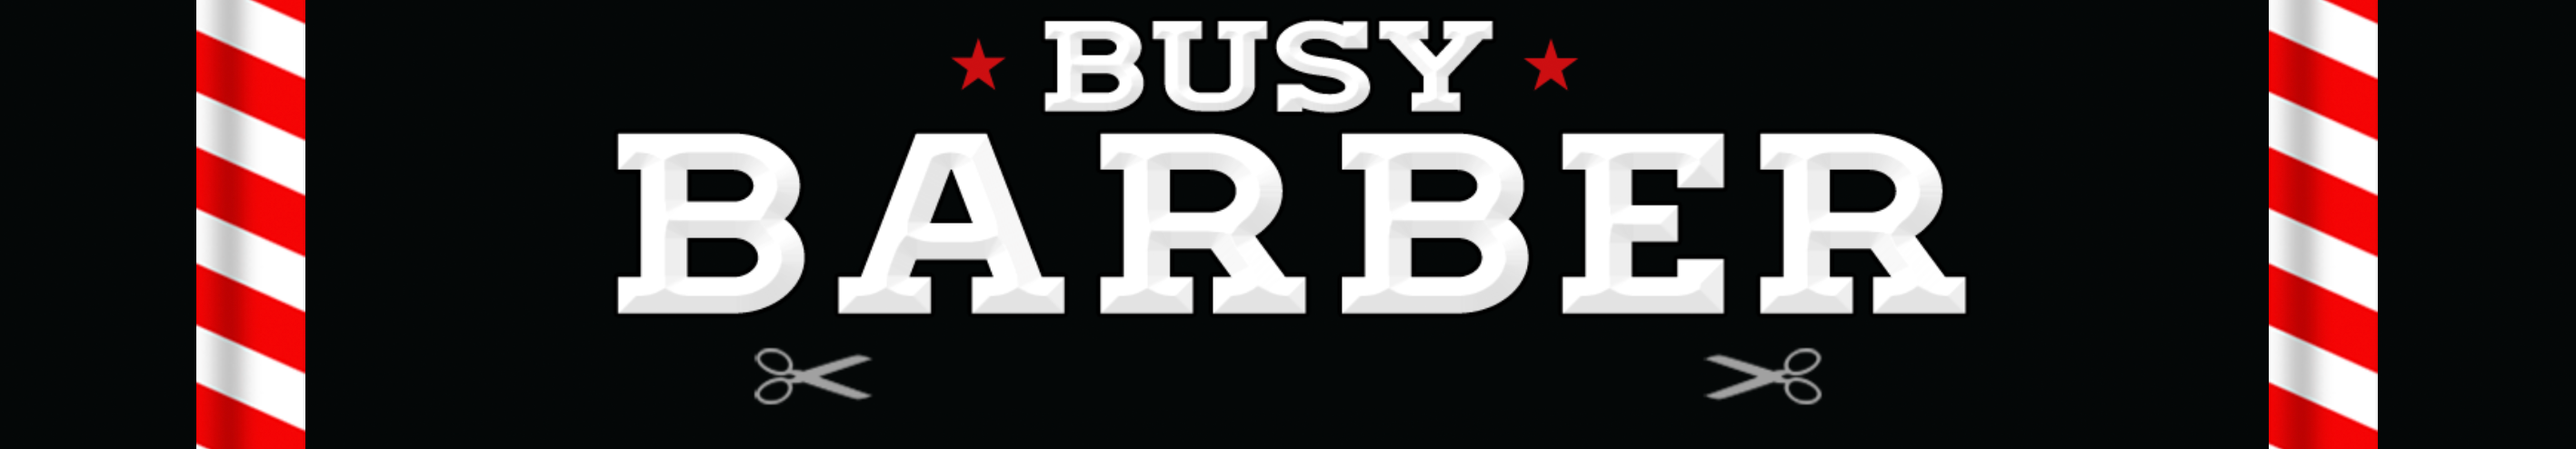 Busy Barber Logo